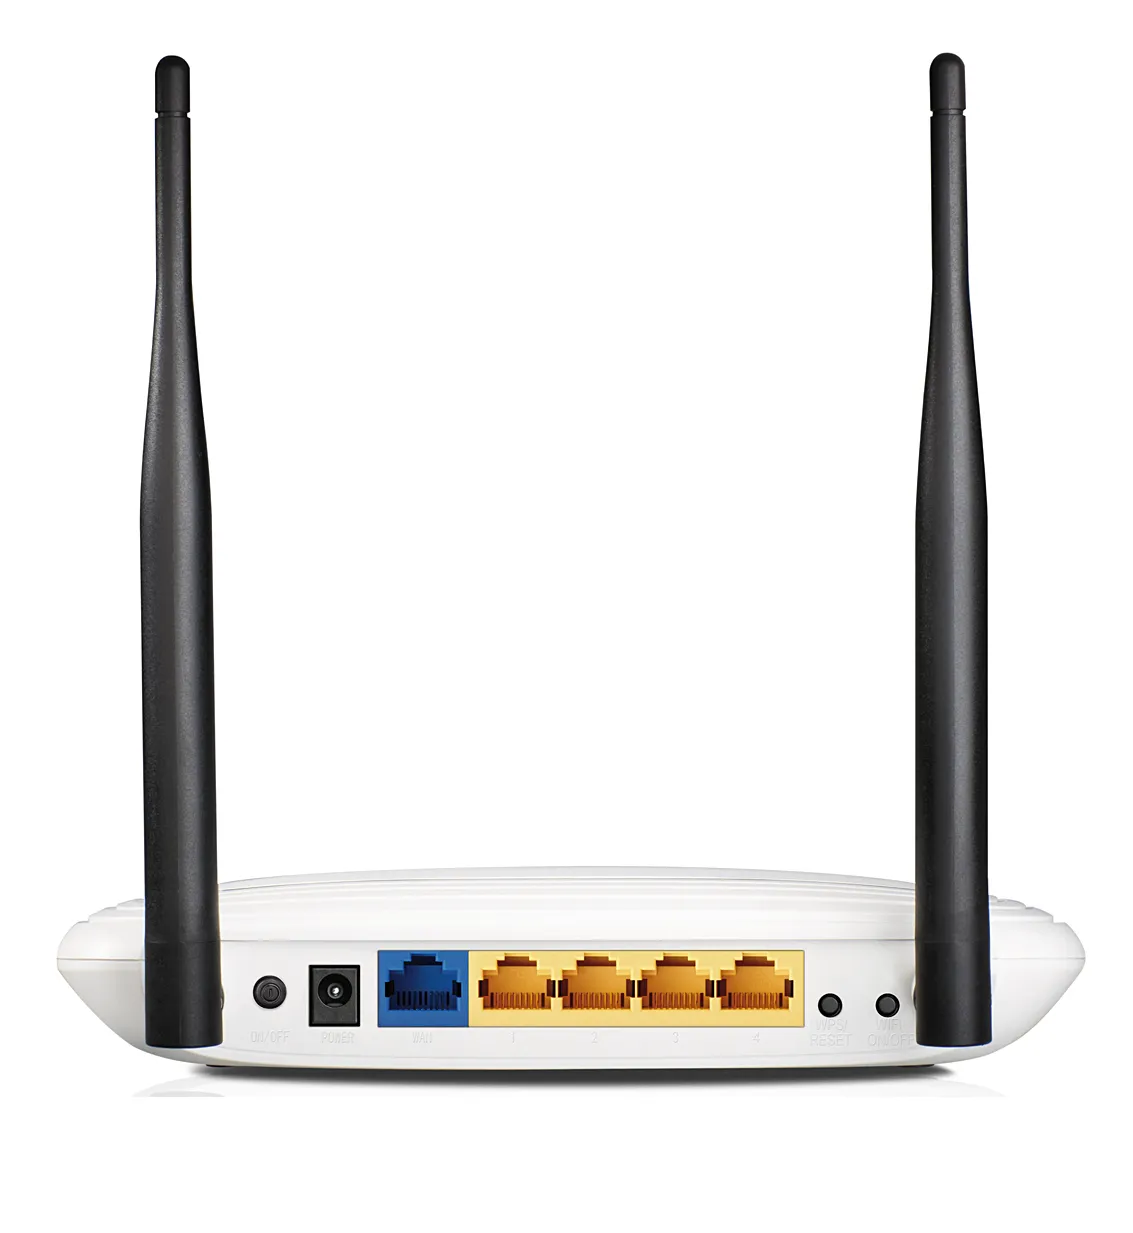 WiFi роутер TL-WR841N 300M Wireless N Router, Qualcomm, 2T2R, 2.4GHz, 802.11b/g/n, 1 10/100M WAN + 4 10/100M LAN, 2 fixed antennas#2